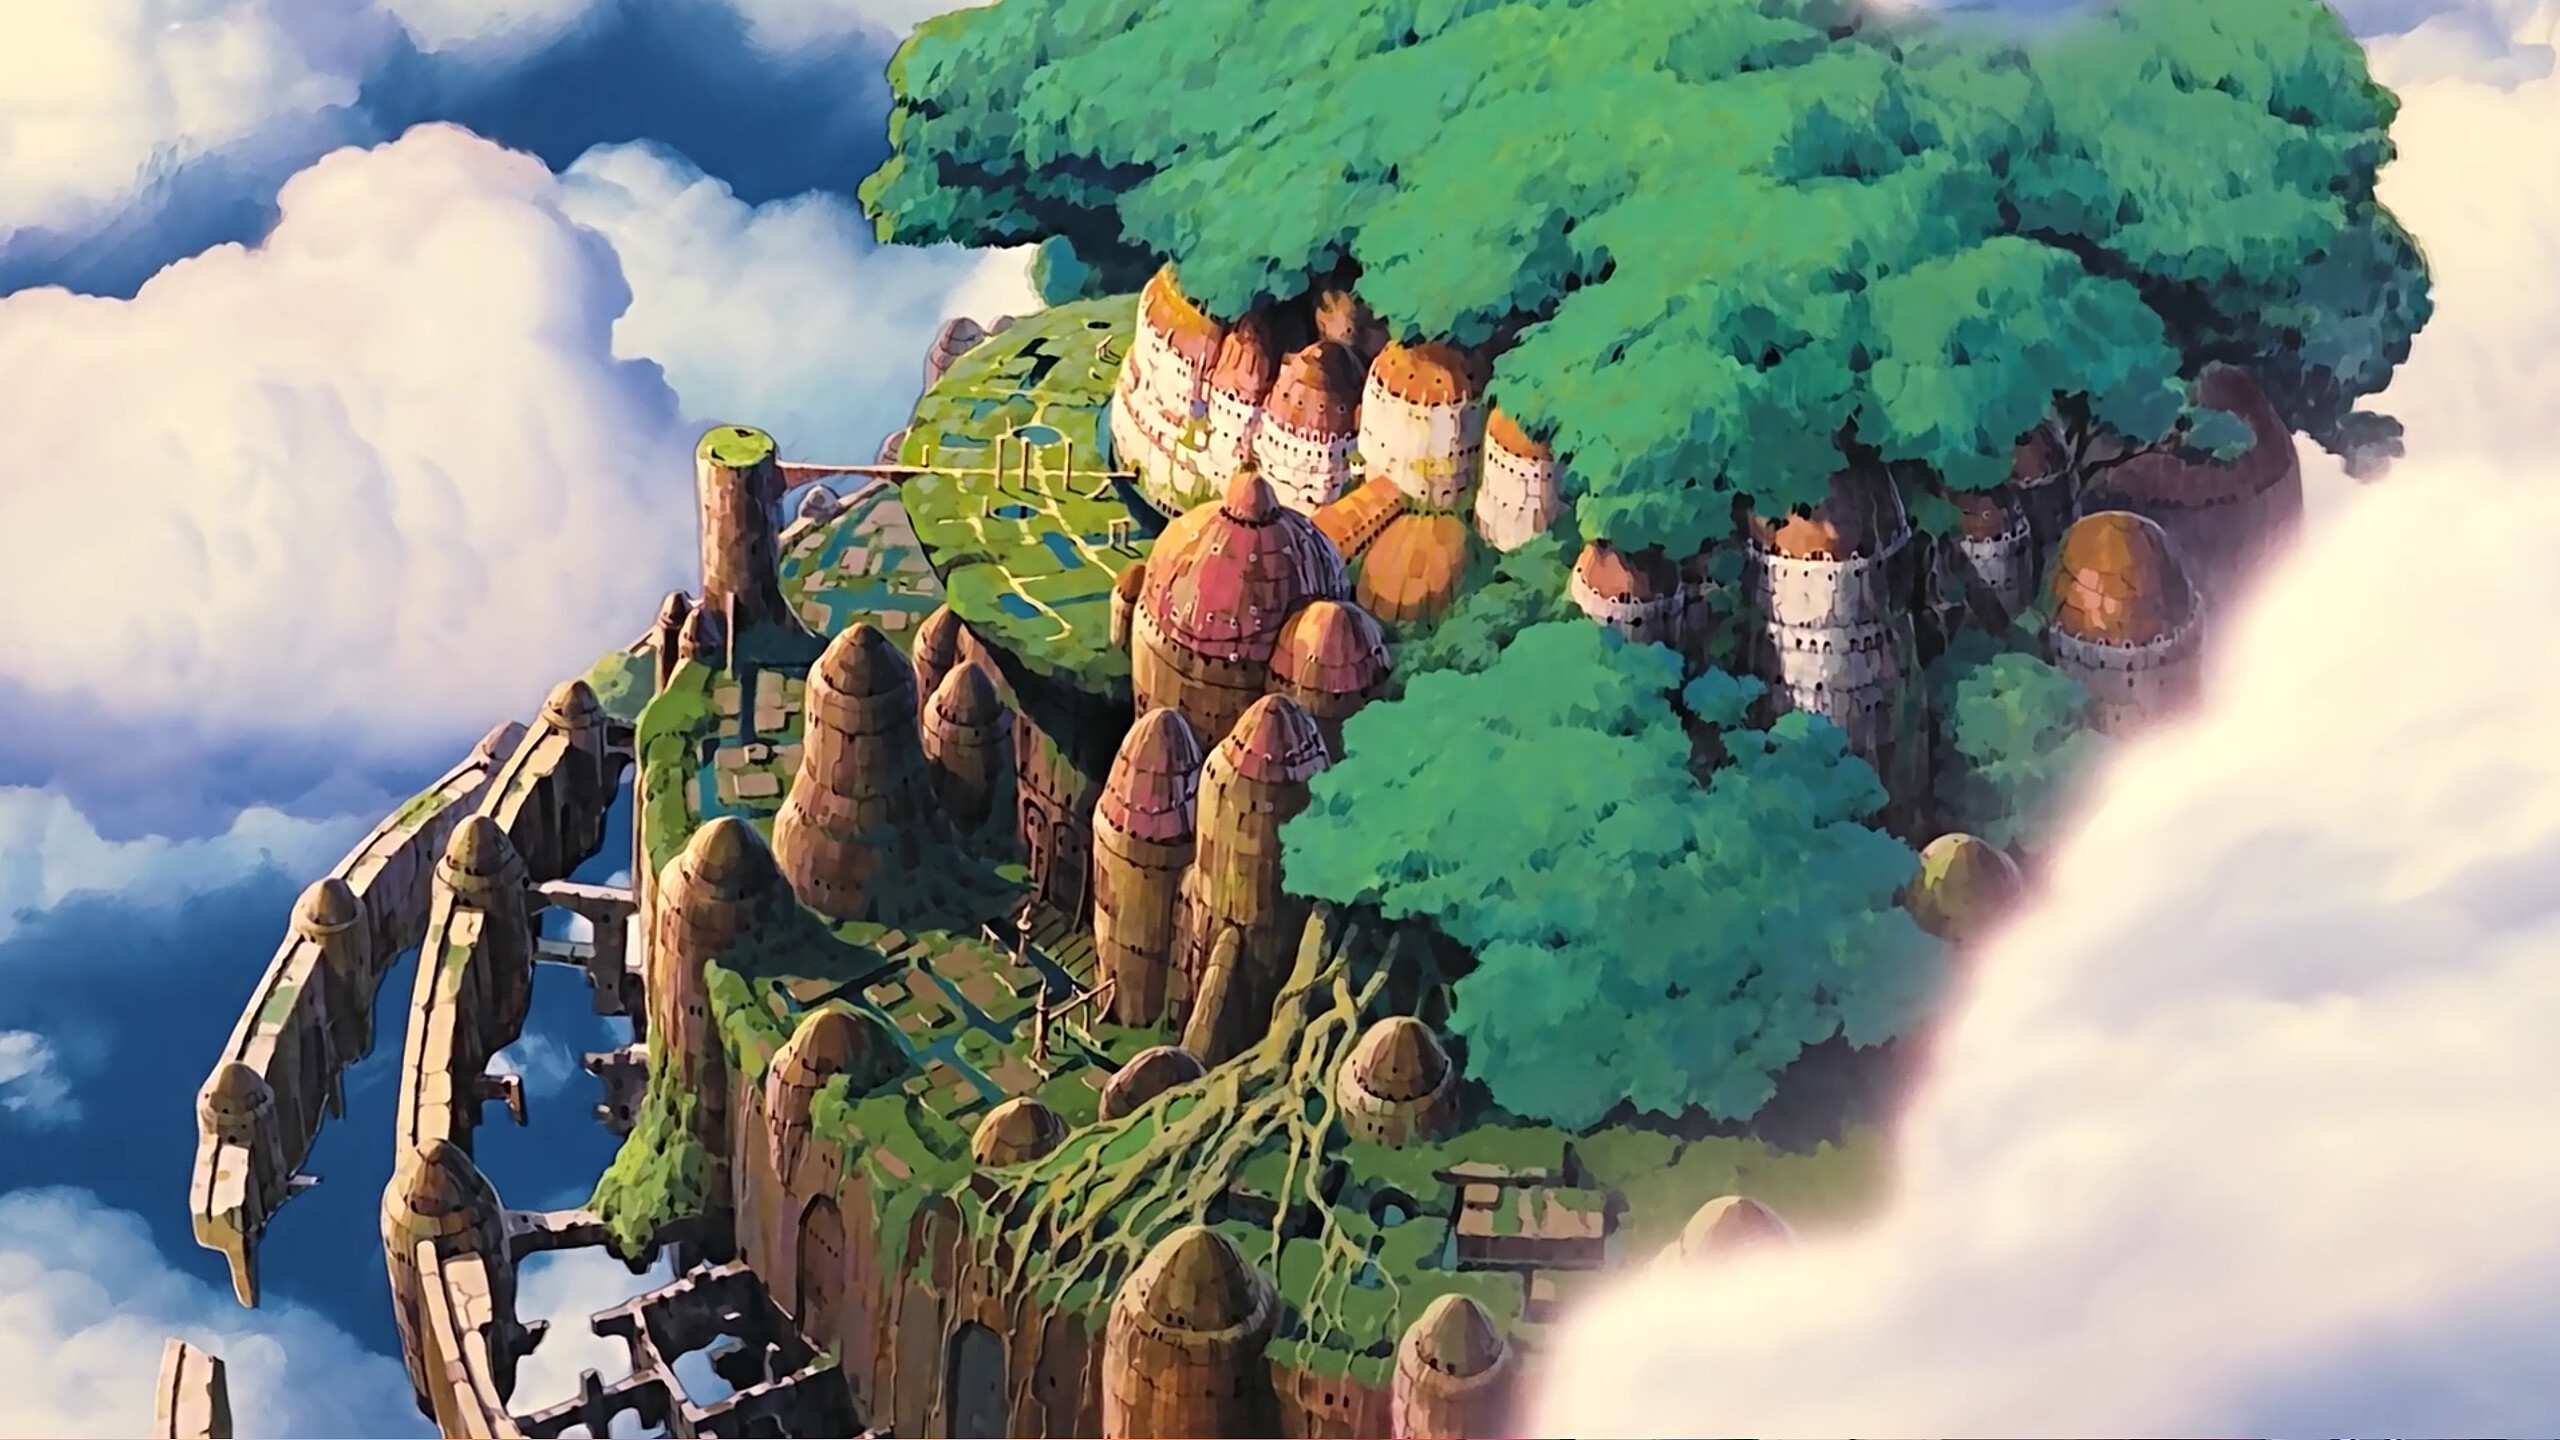 Laputa: Castle in the Sky: A fantasy adventure film, Distributed by Toei Company. 2560x1440 HD Wallpaper.